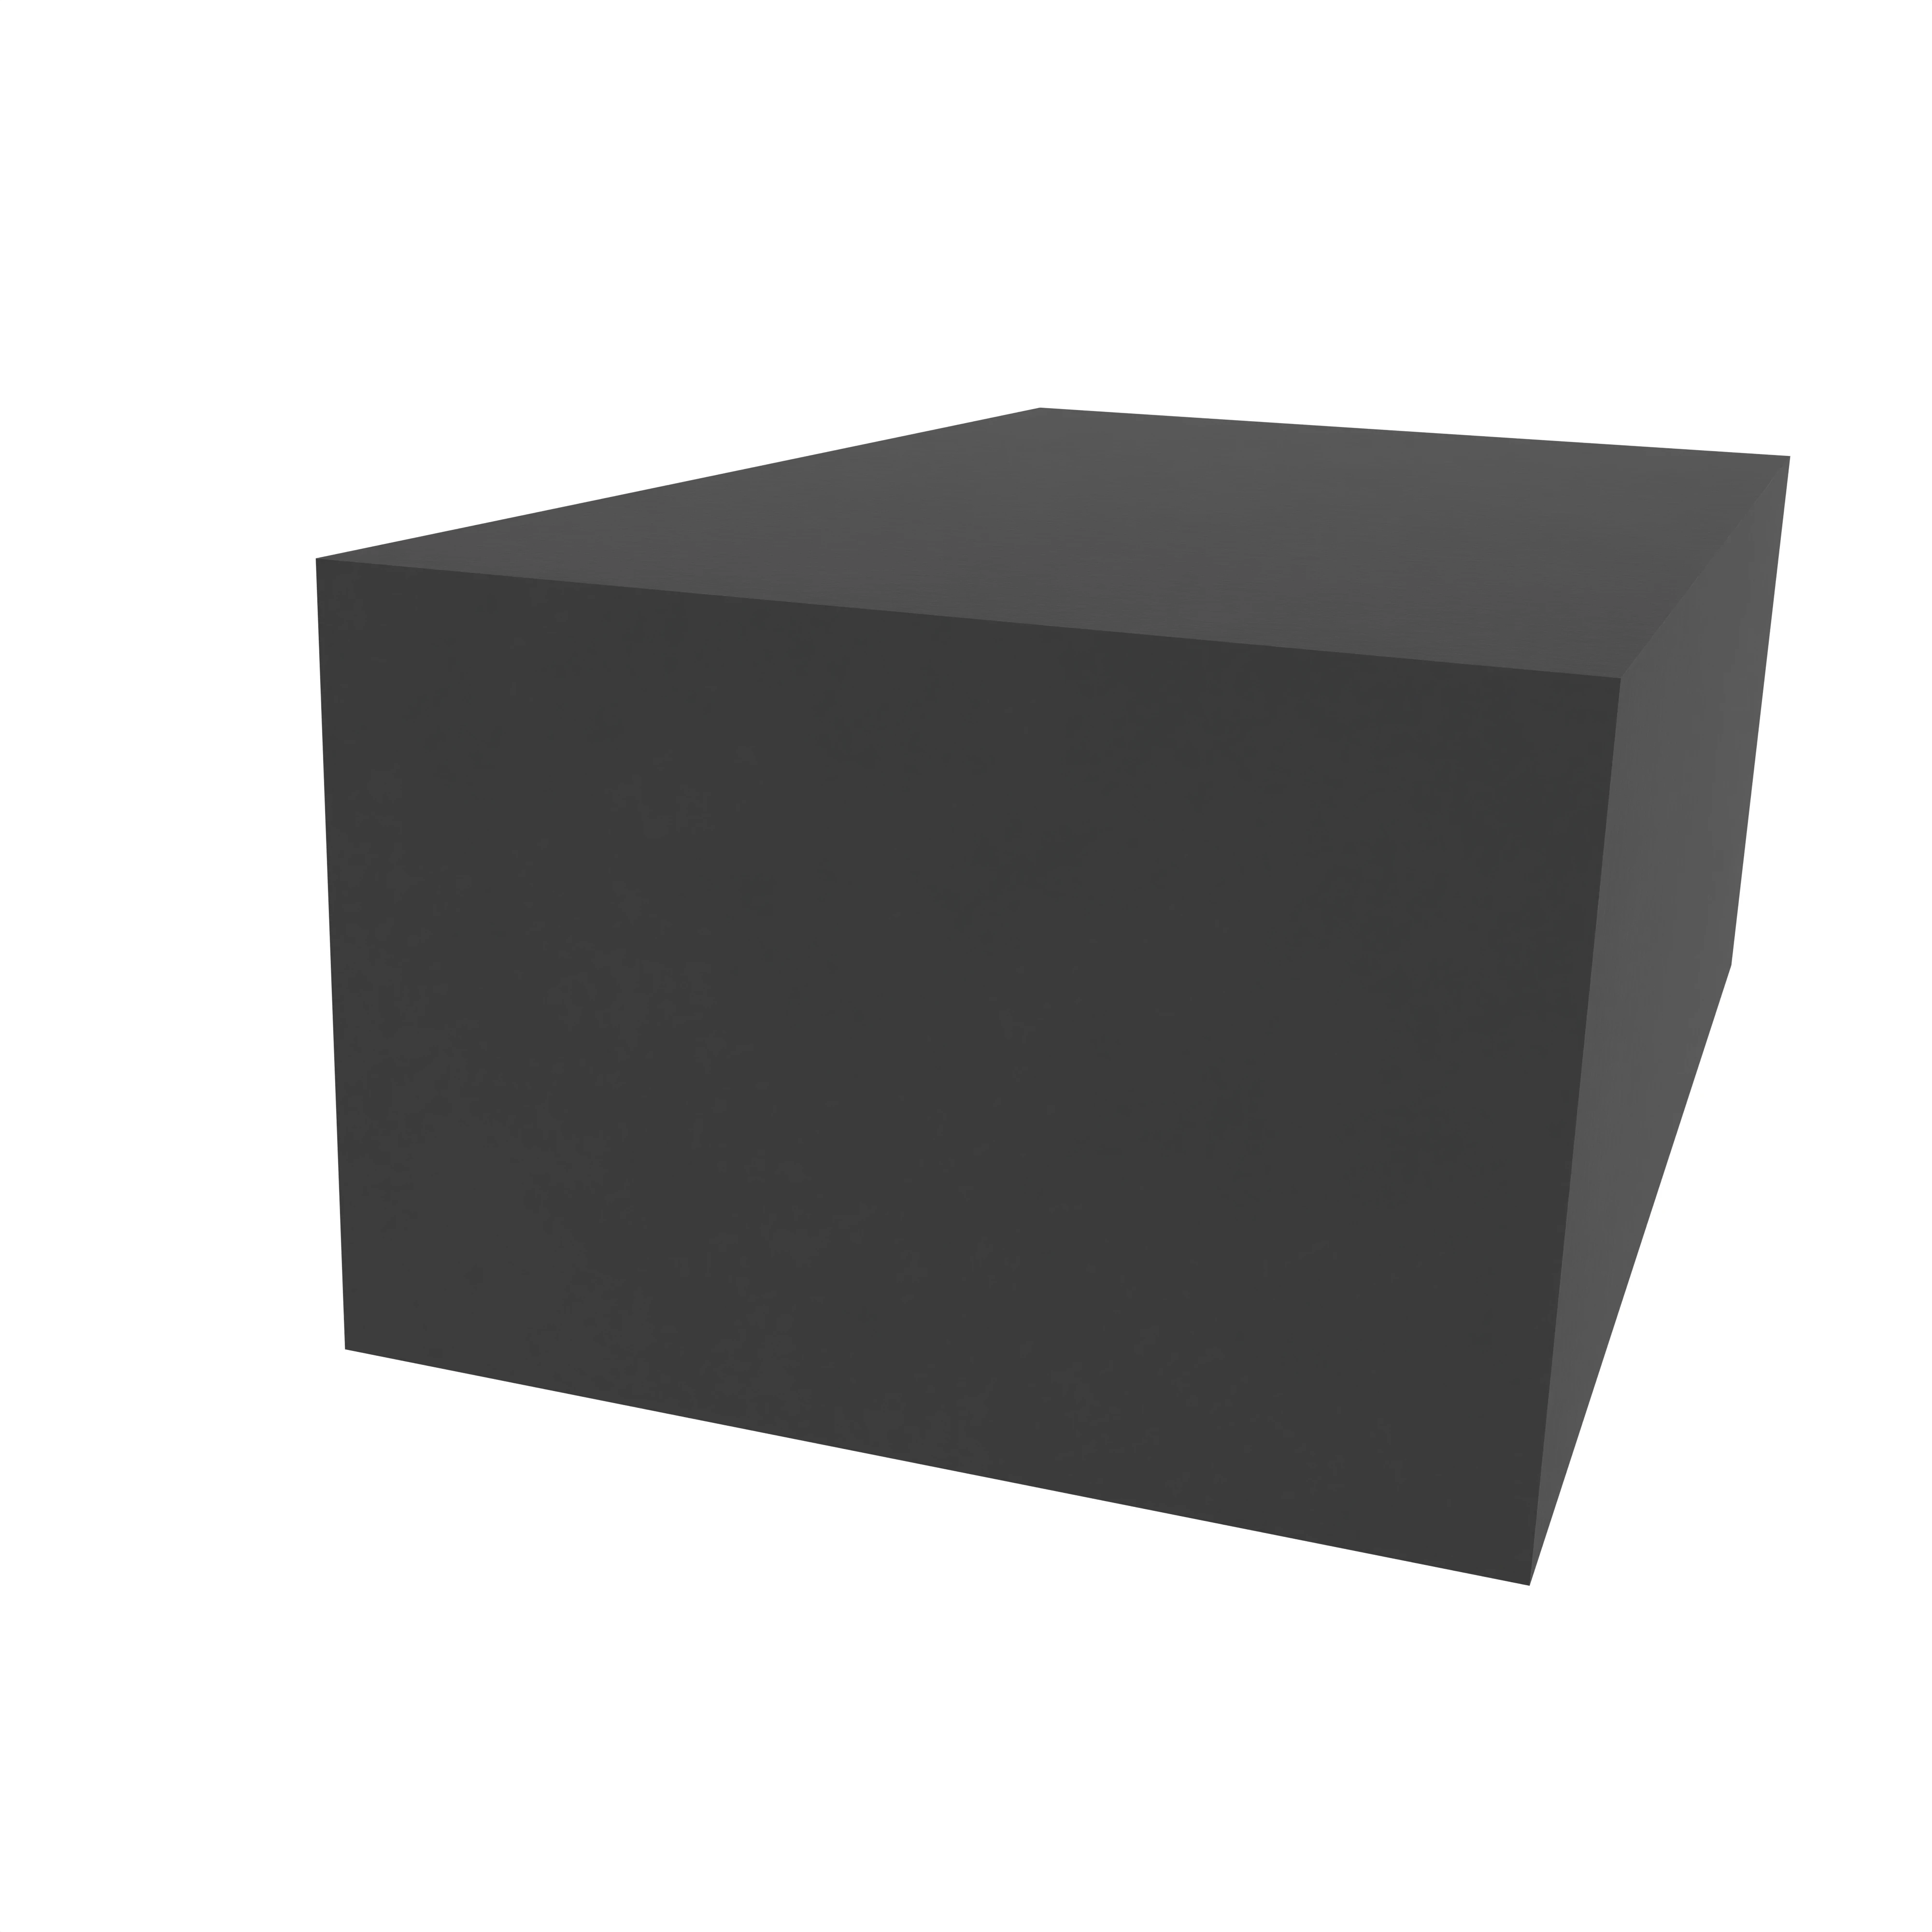 Moosgummidichtung vierkant | 20 mm Höhe | Farbe: schwarz